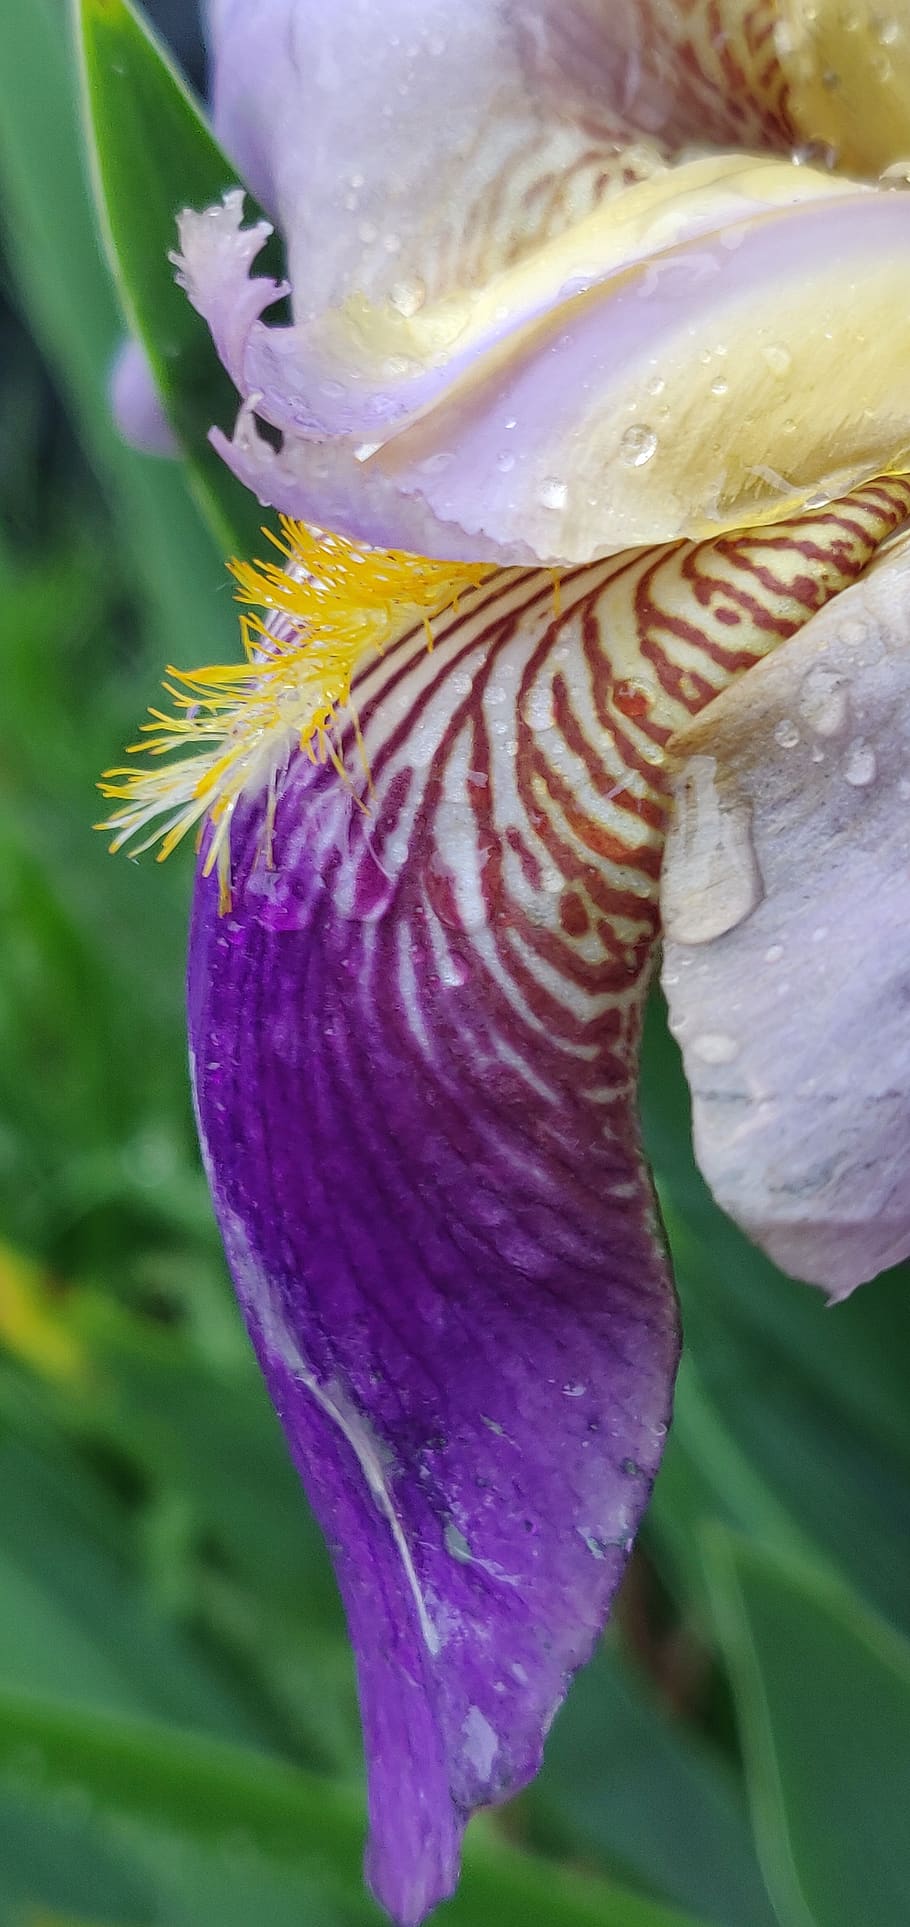 iris, flower, purple, rain, striped, garden, nature, outdoor, beauty, bloom